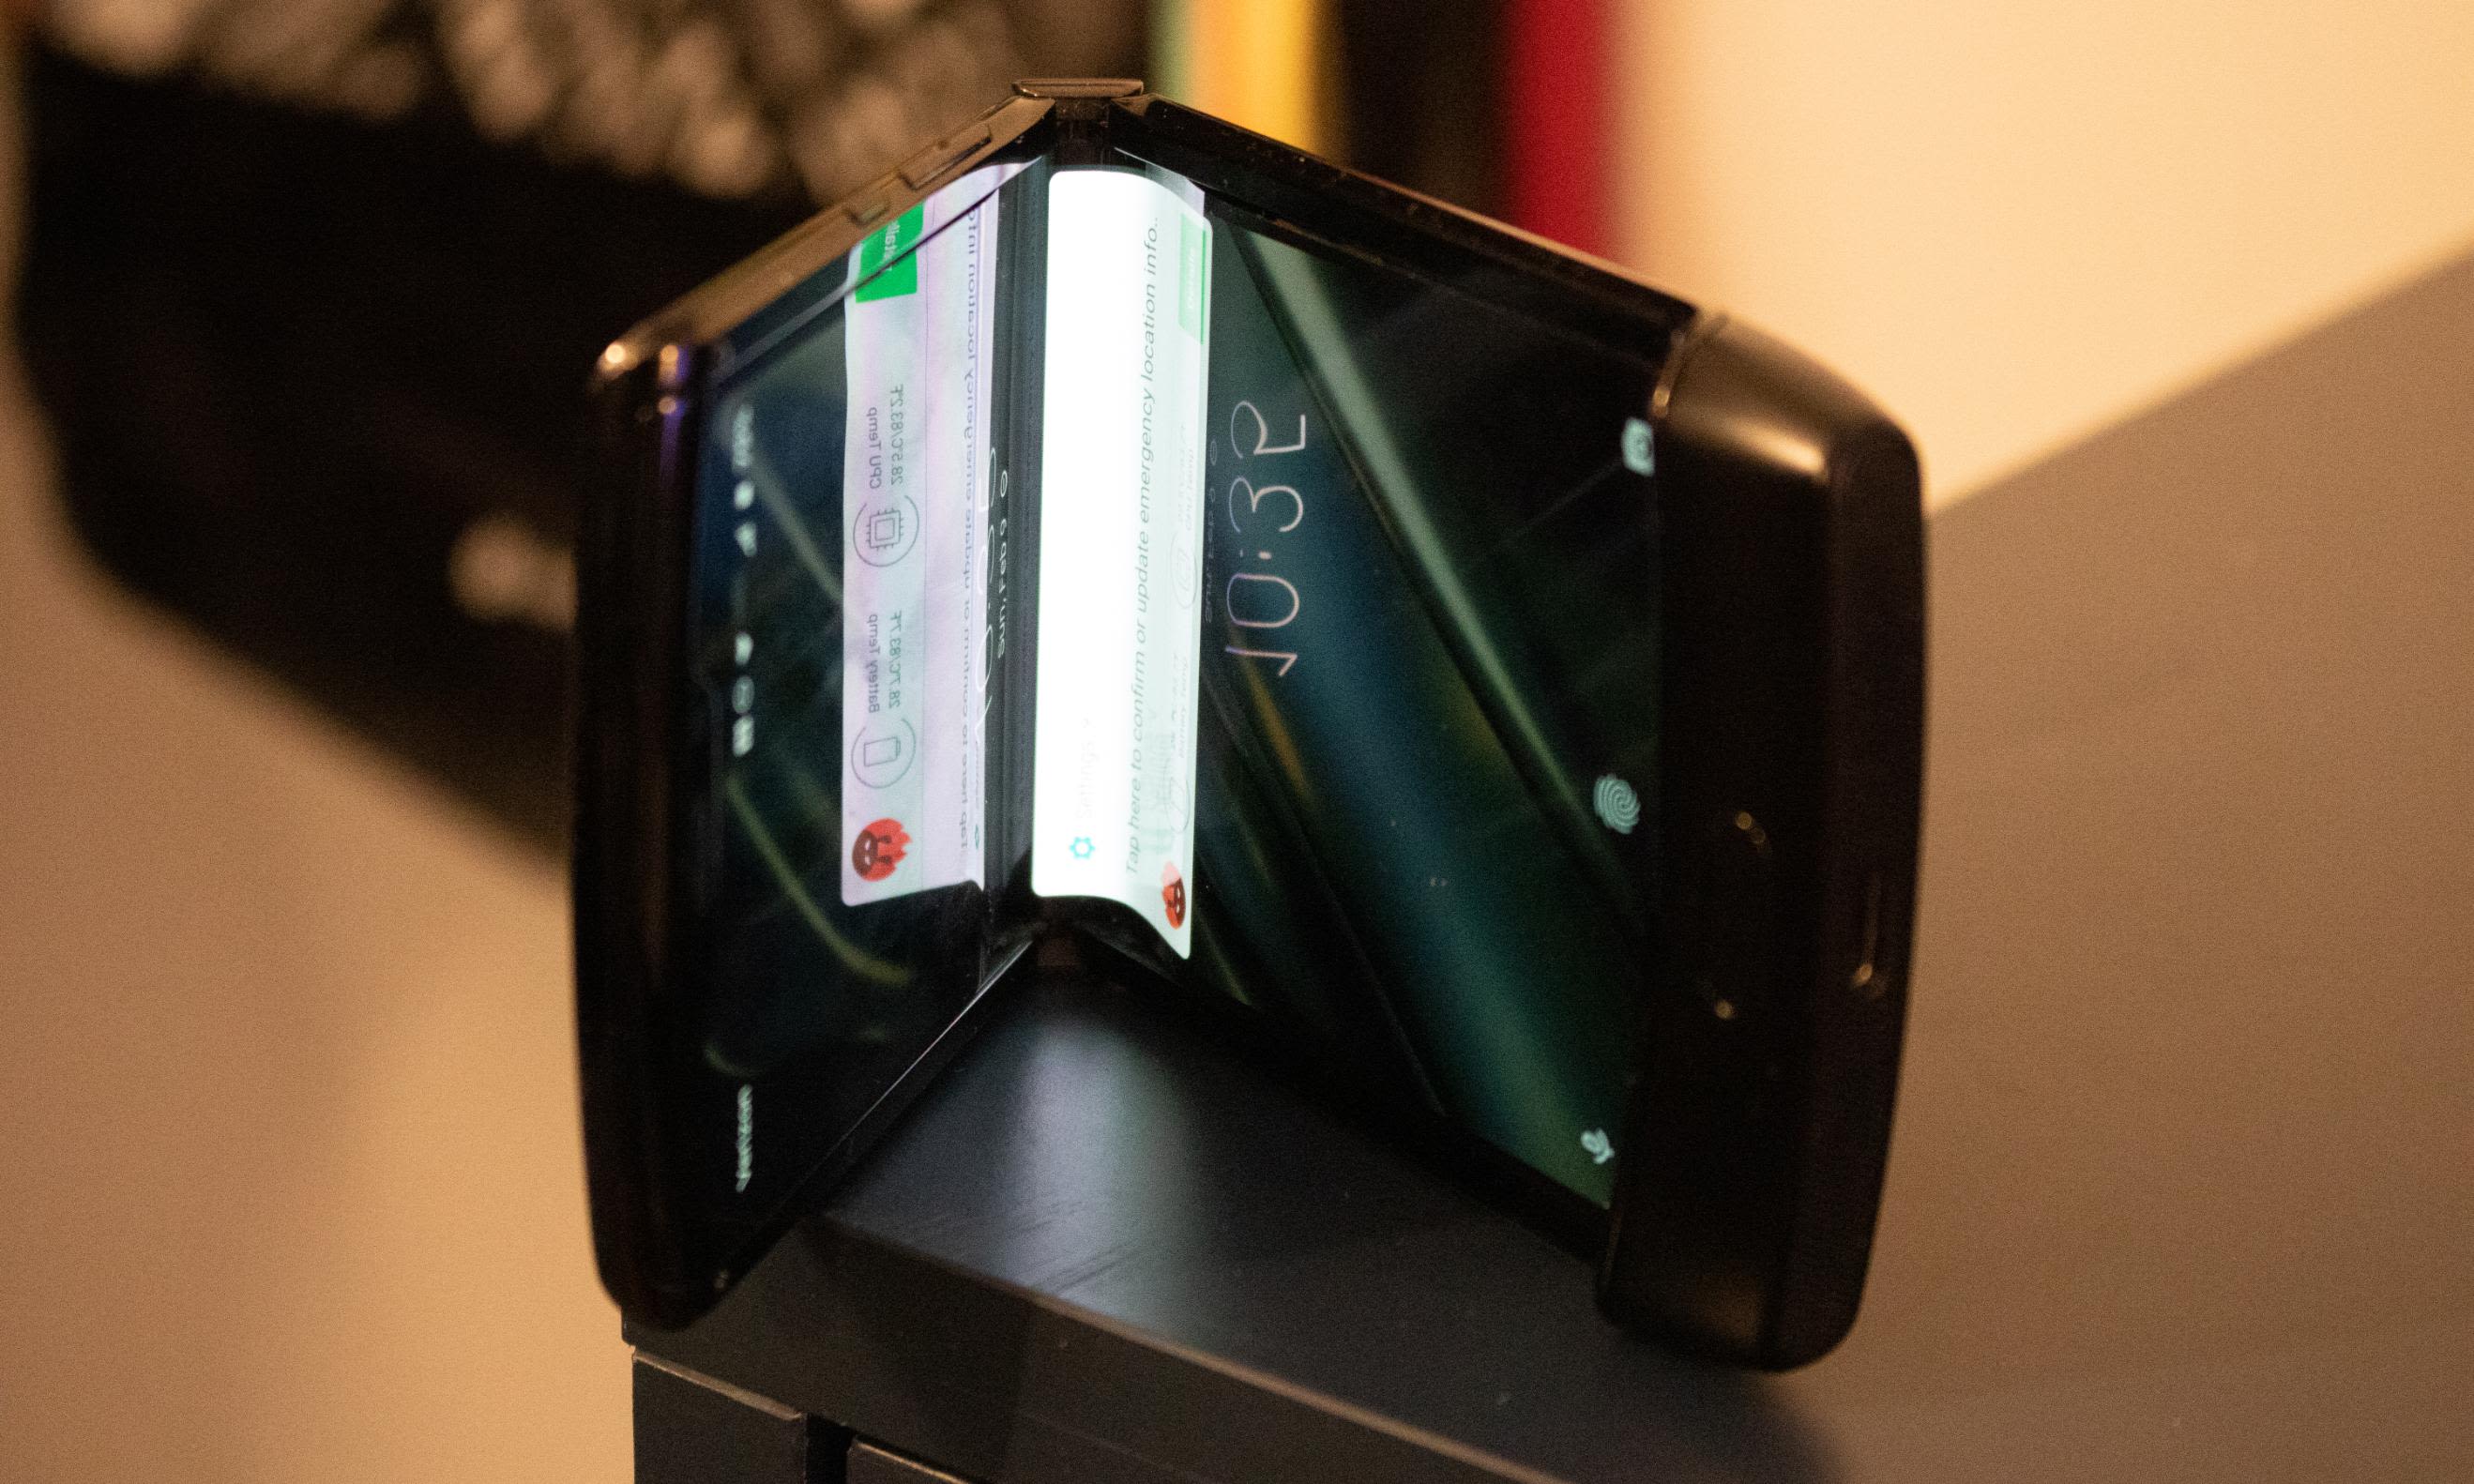 Motorola Razr 2019 Smartphone Review – Foldable Phone with Retro